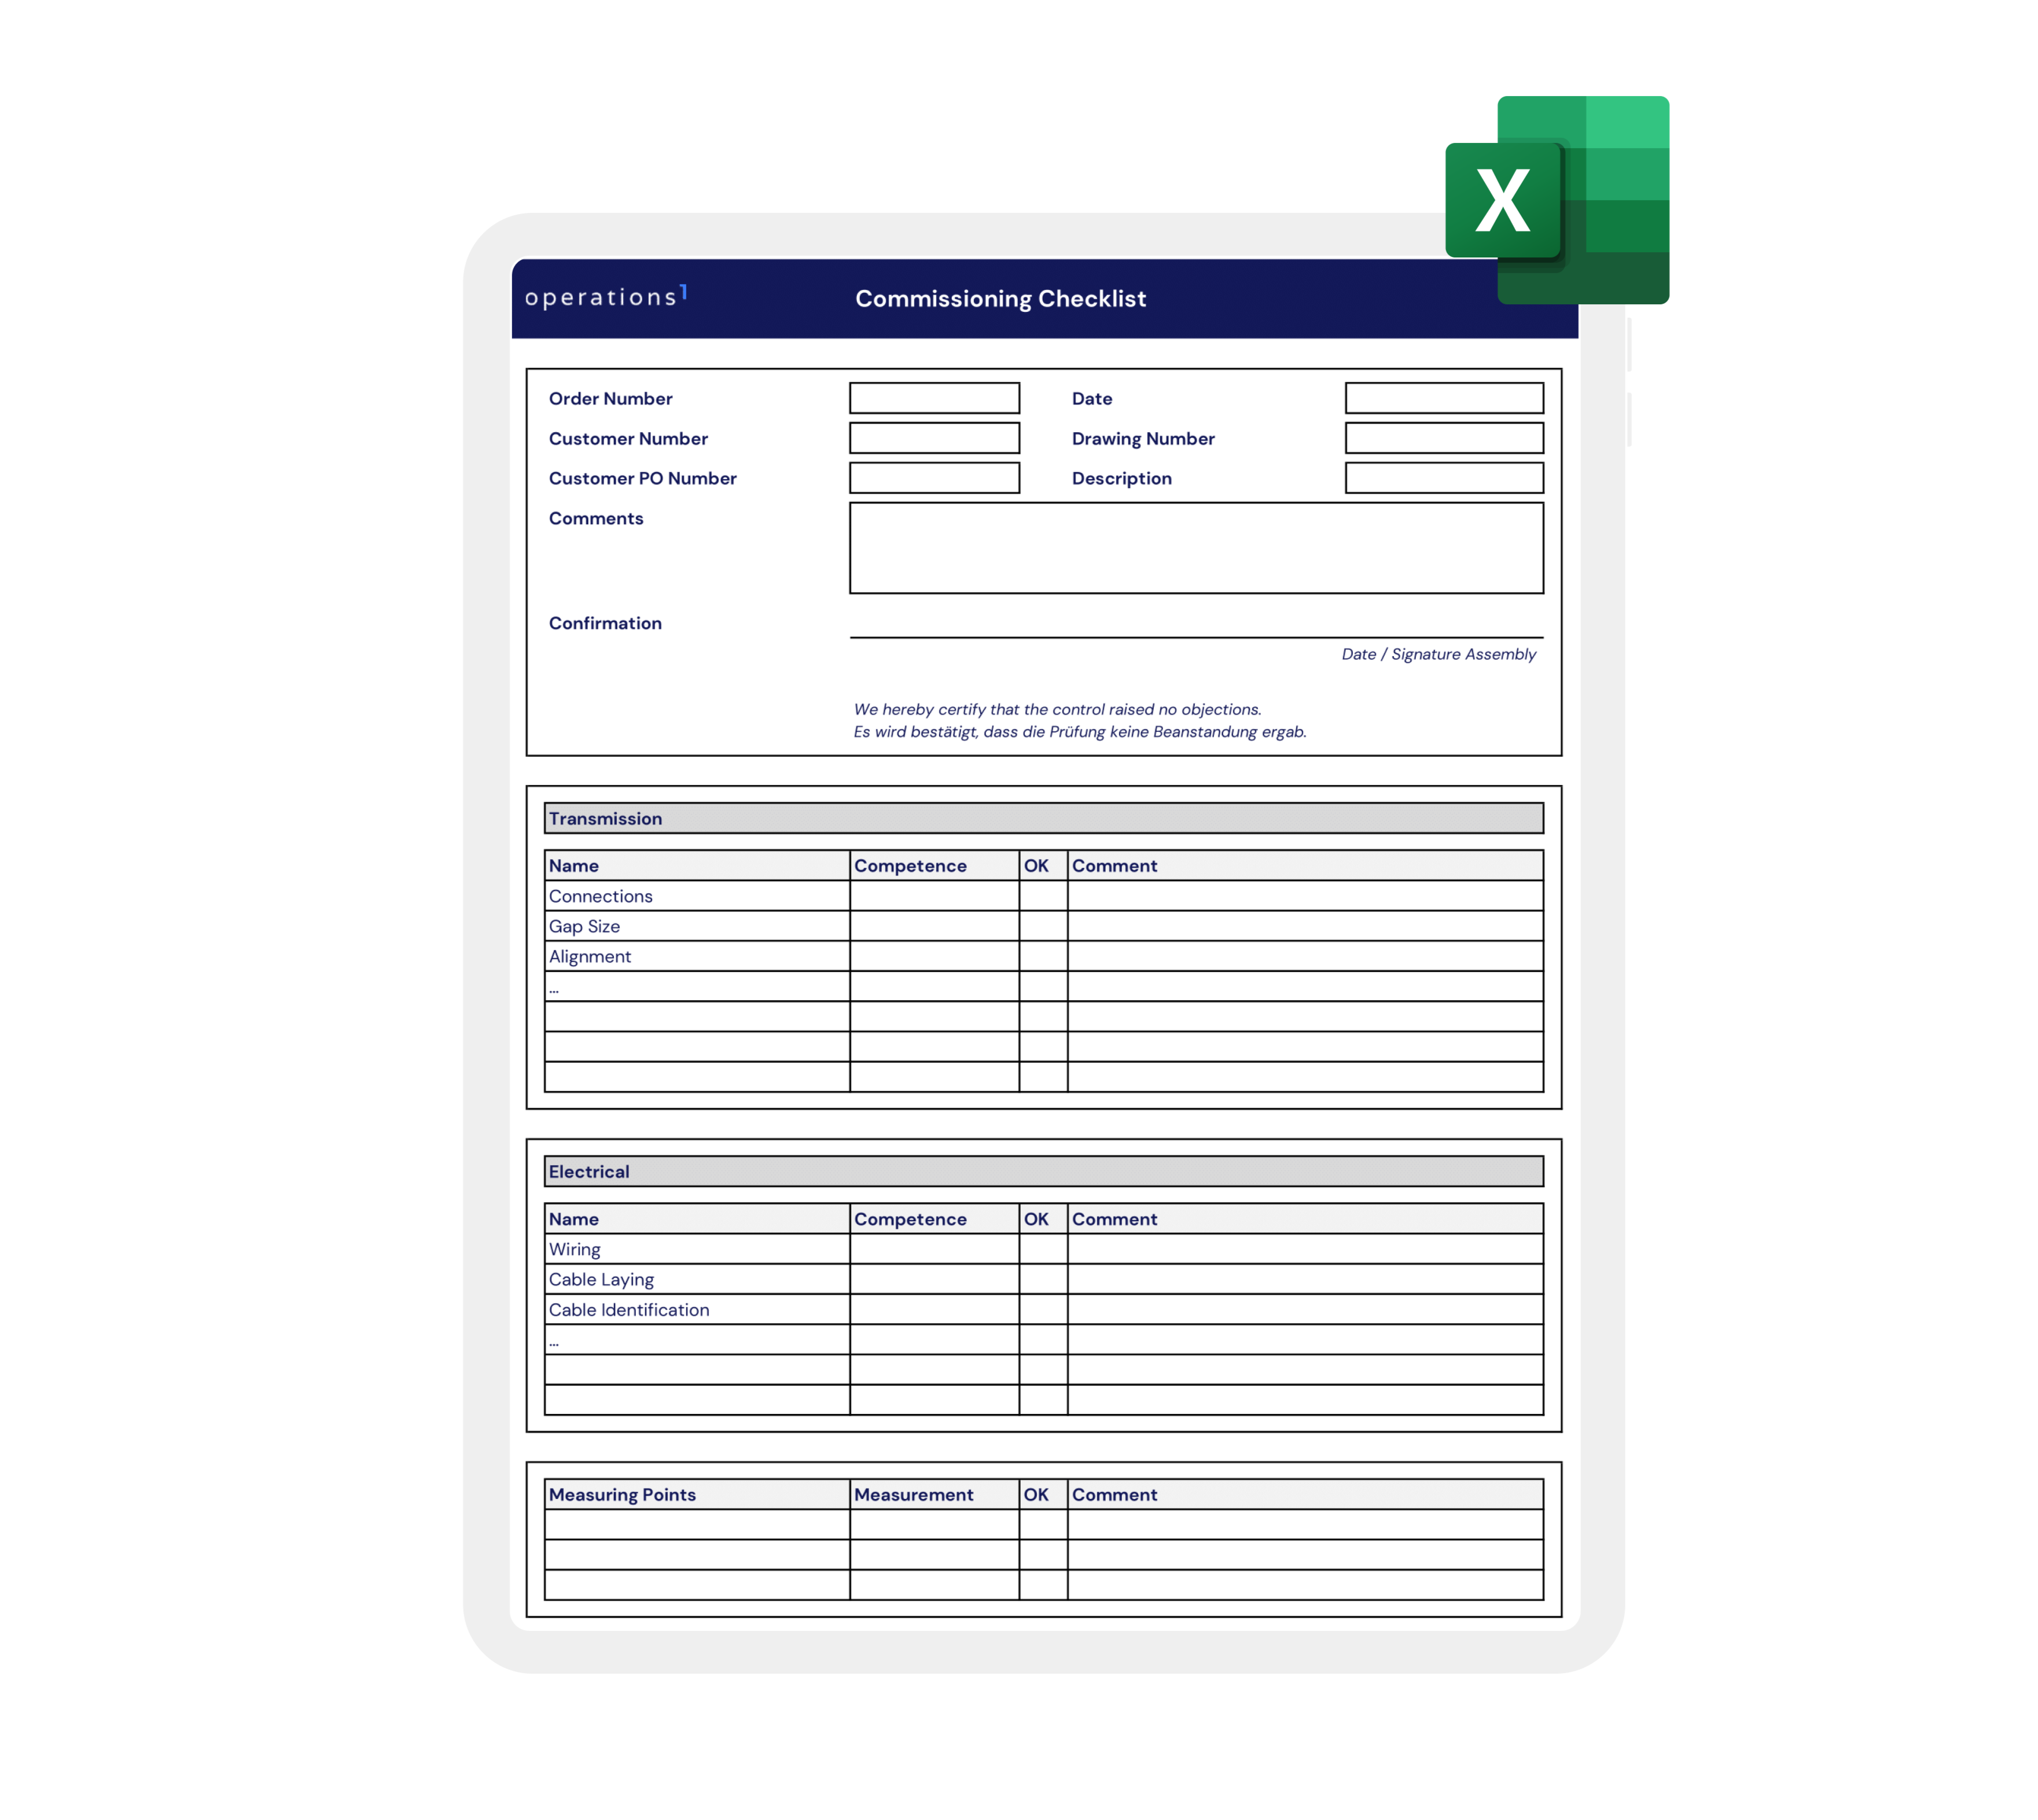 Factory Acceptance Test checklist template